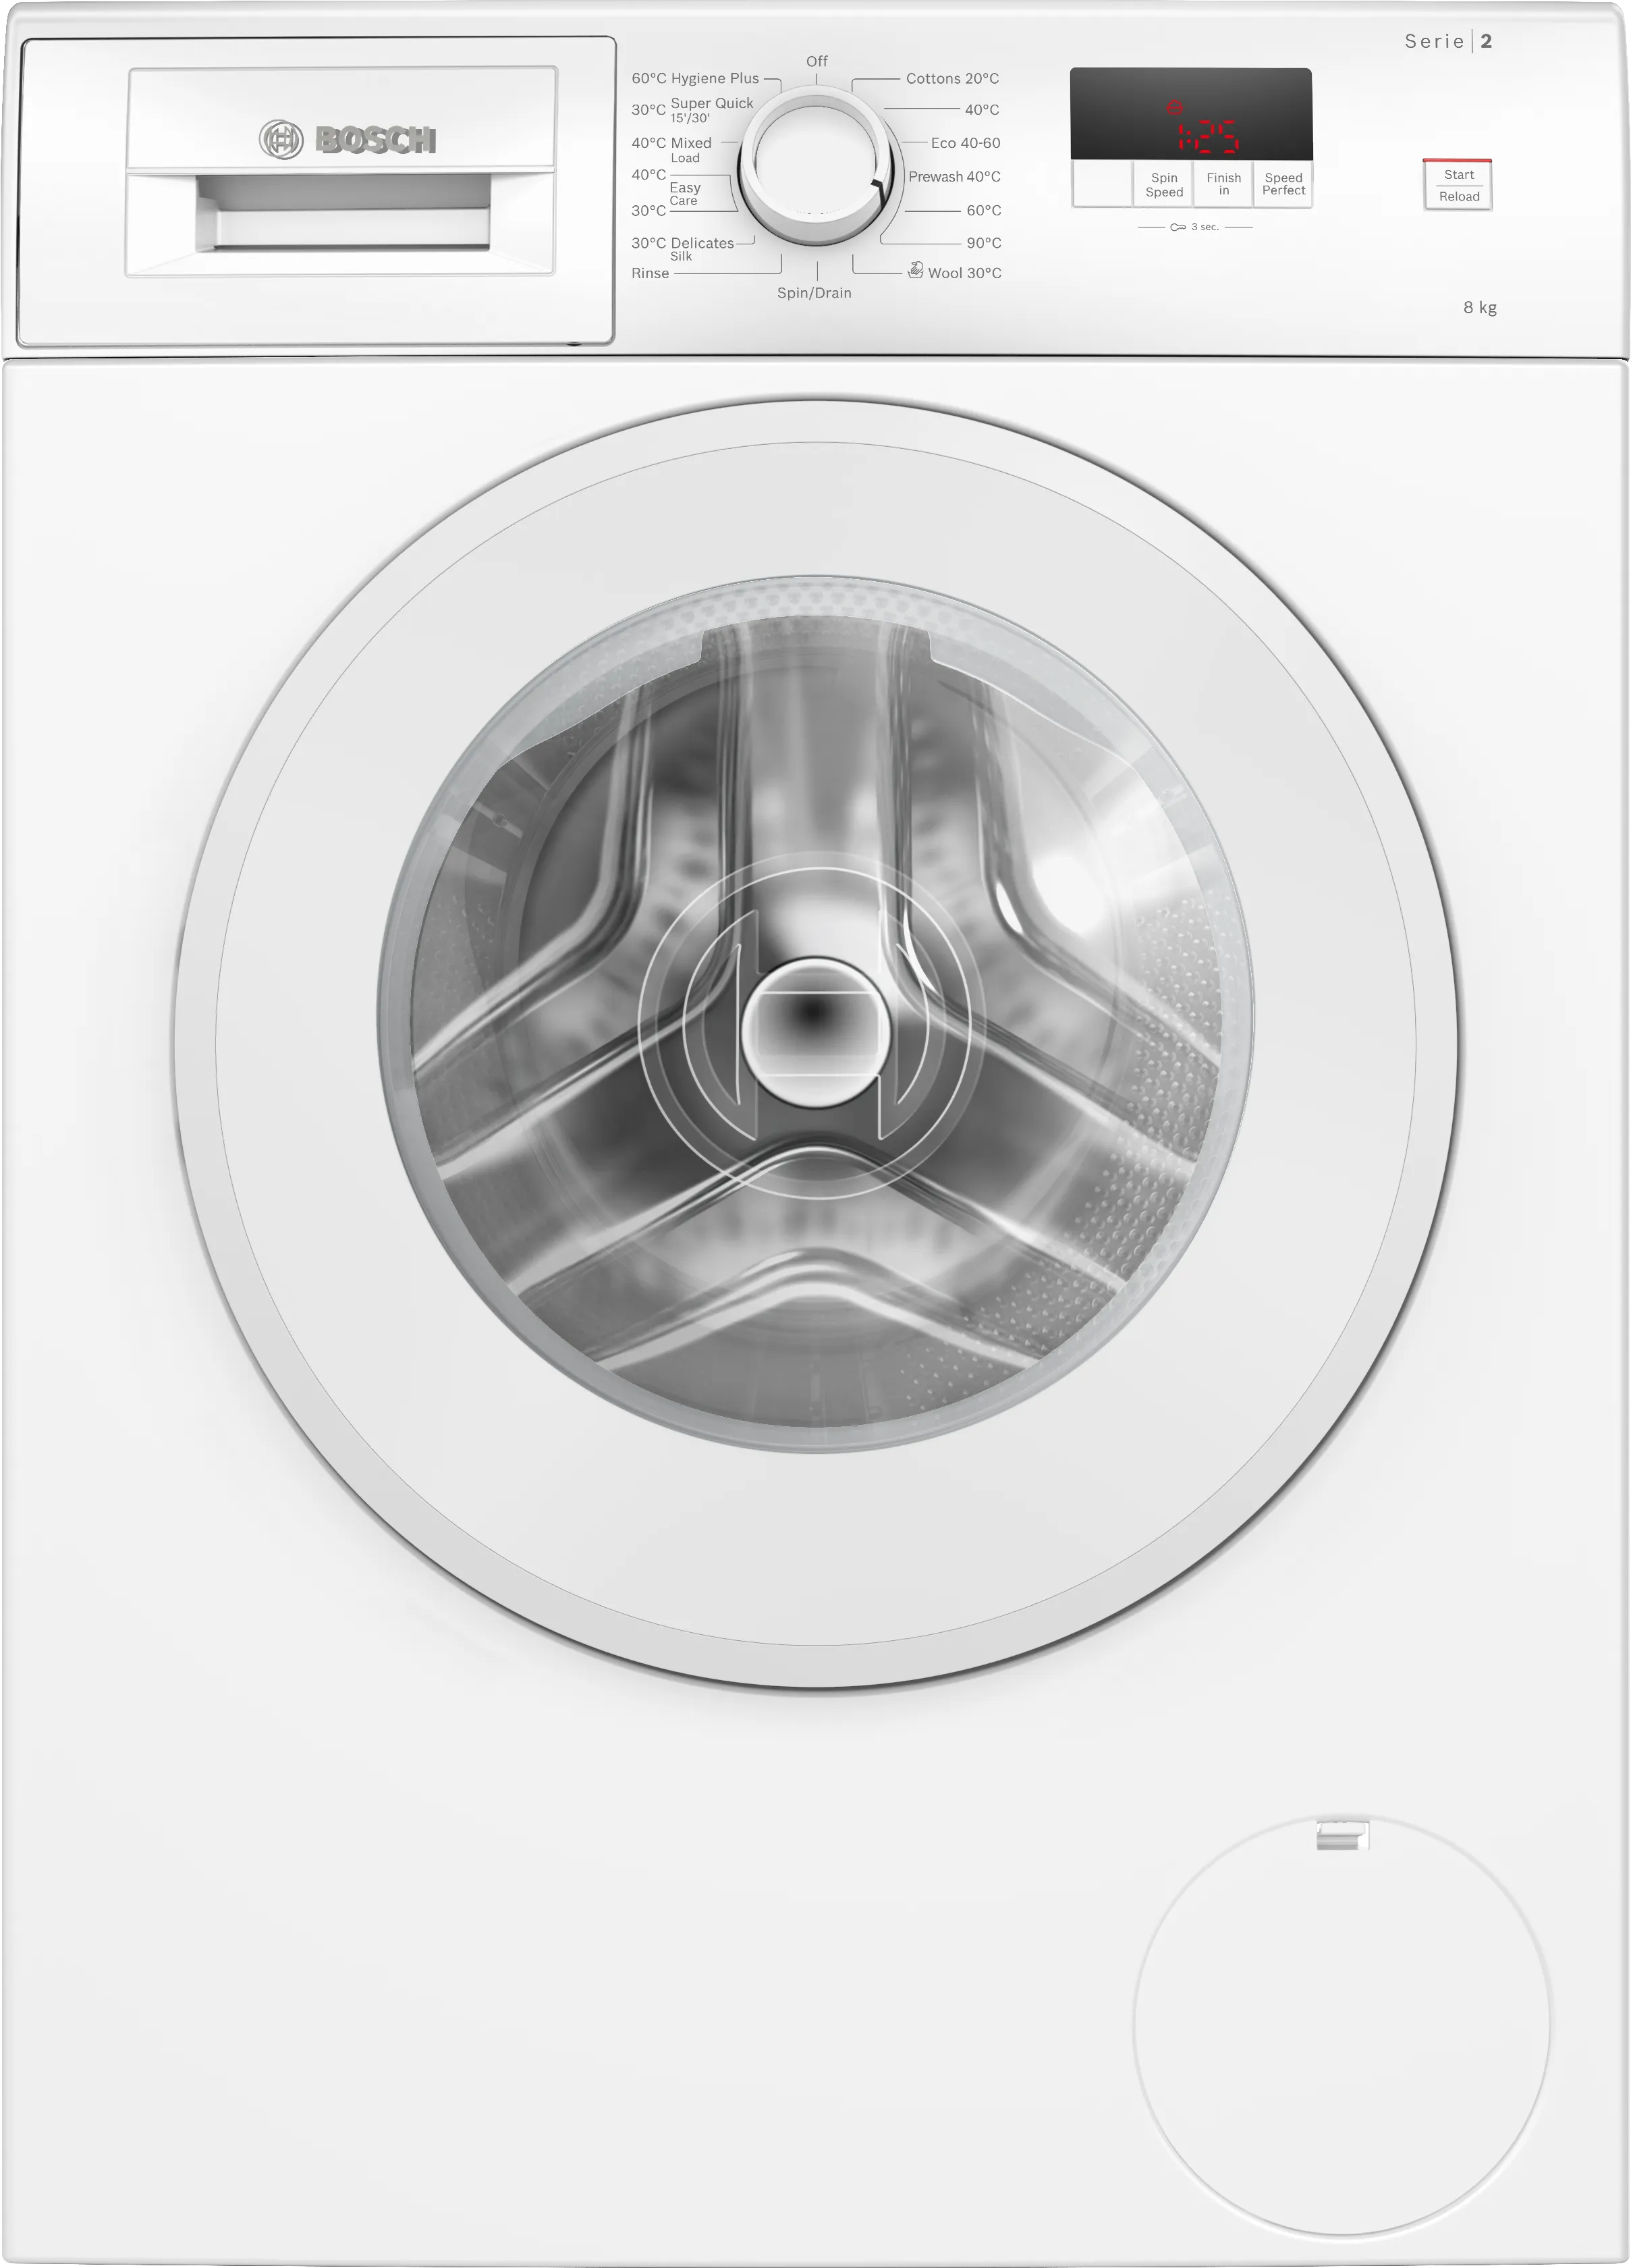 Series 2 washing machine, frontloader fullsize 8 kg 1400 rpm 